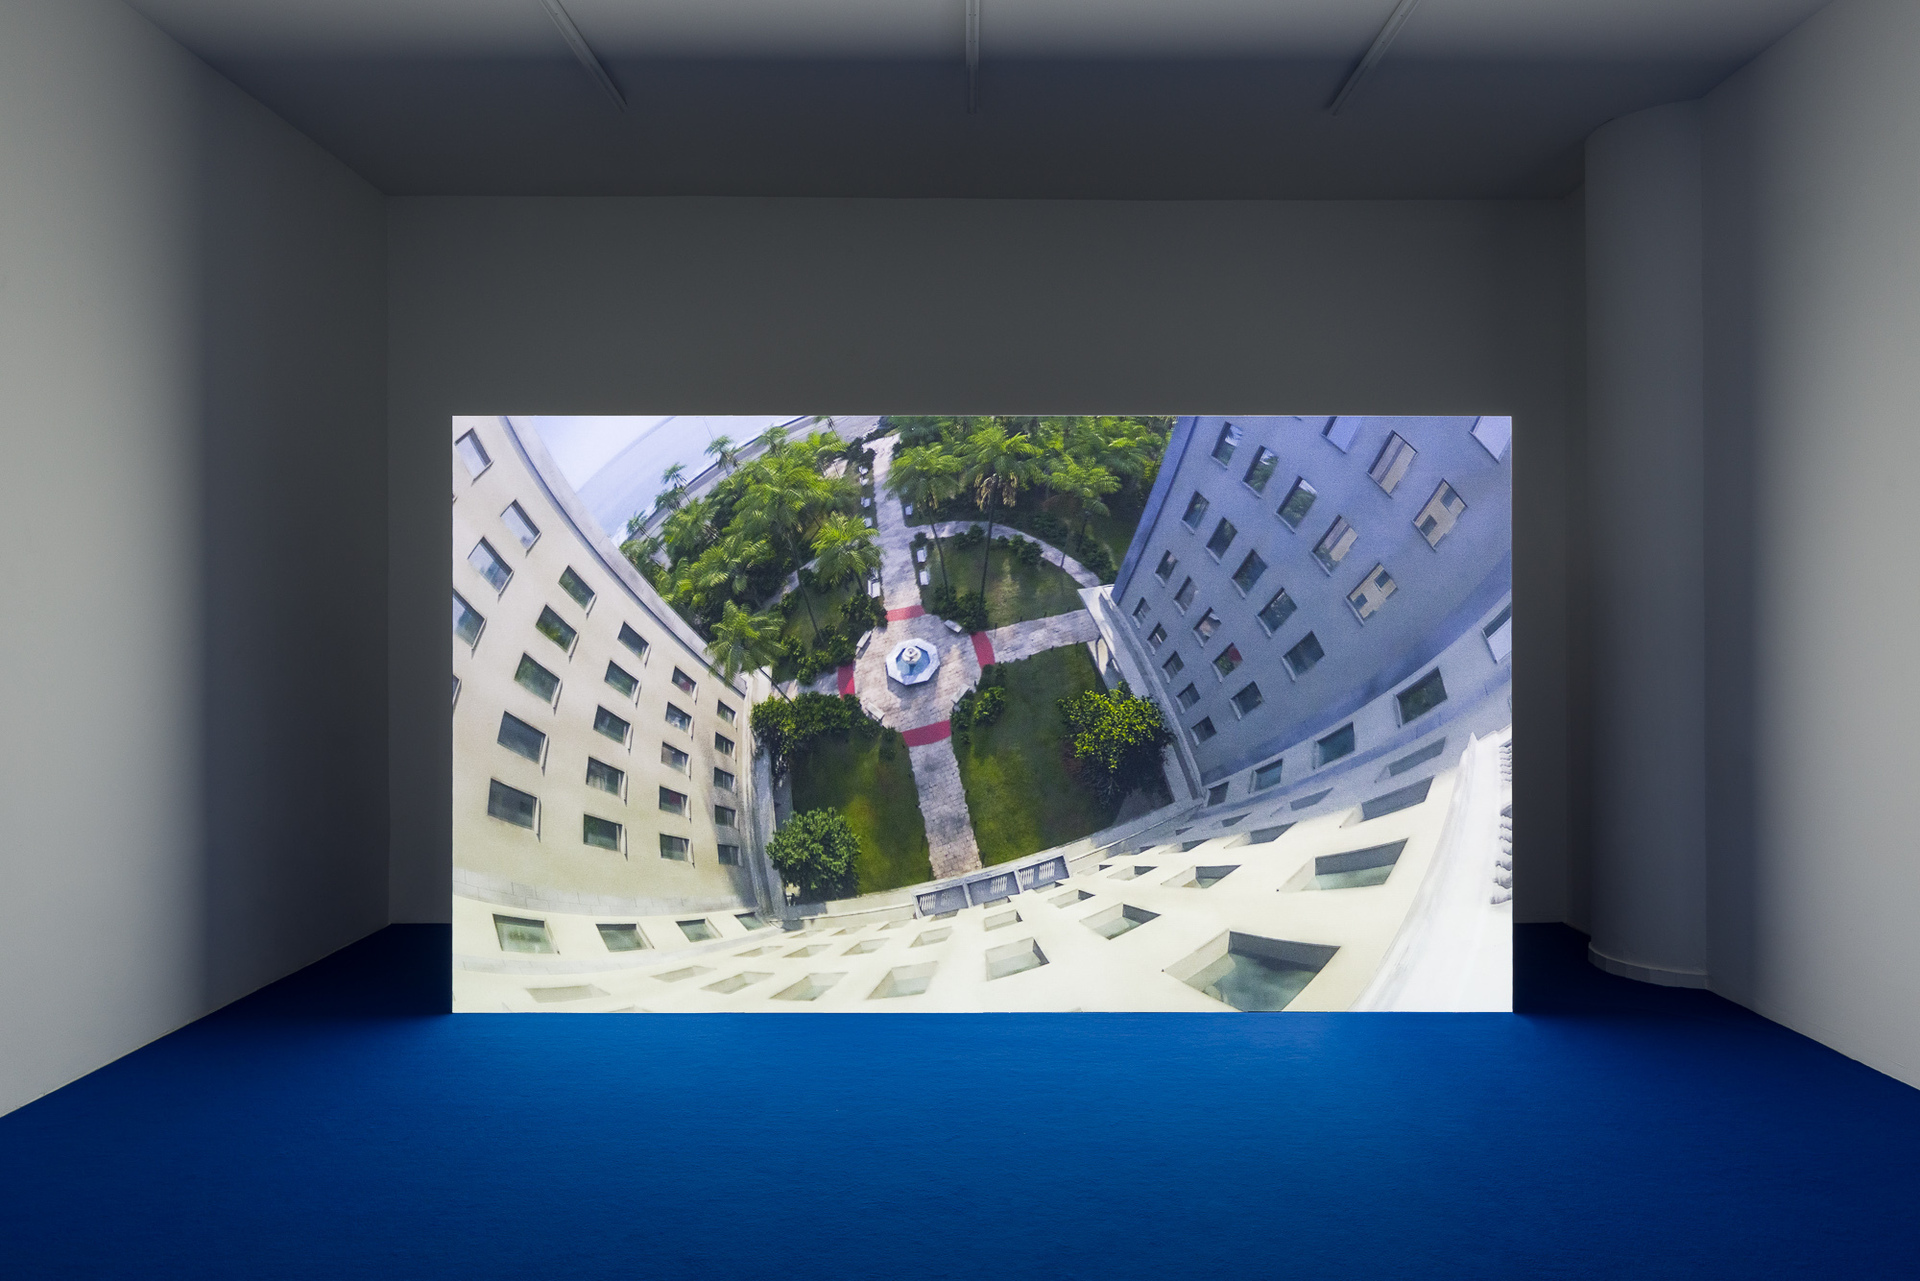 Sung Tieu, Hotel Nacional de Cuba, Kunstverein Gartenhaus, installation view, 2022